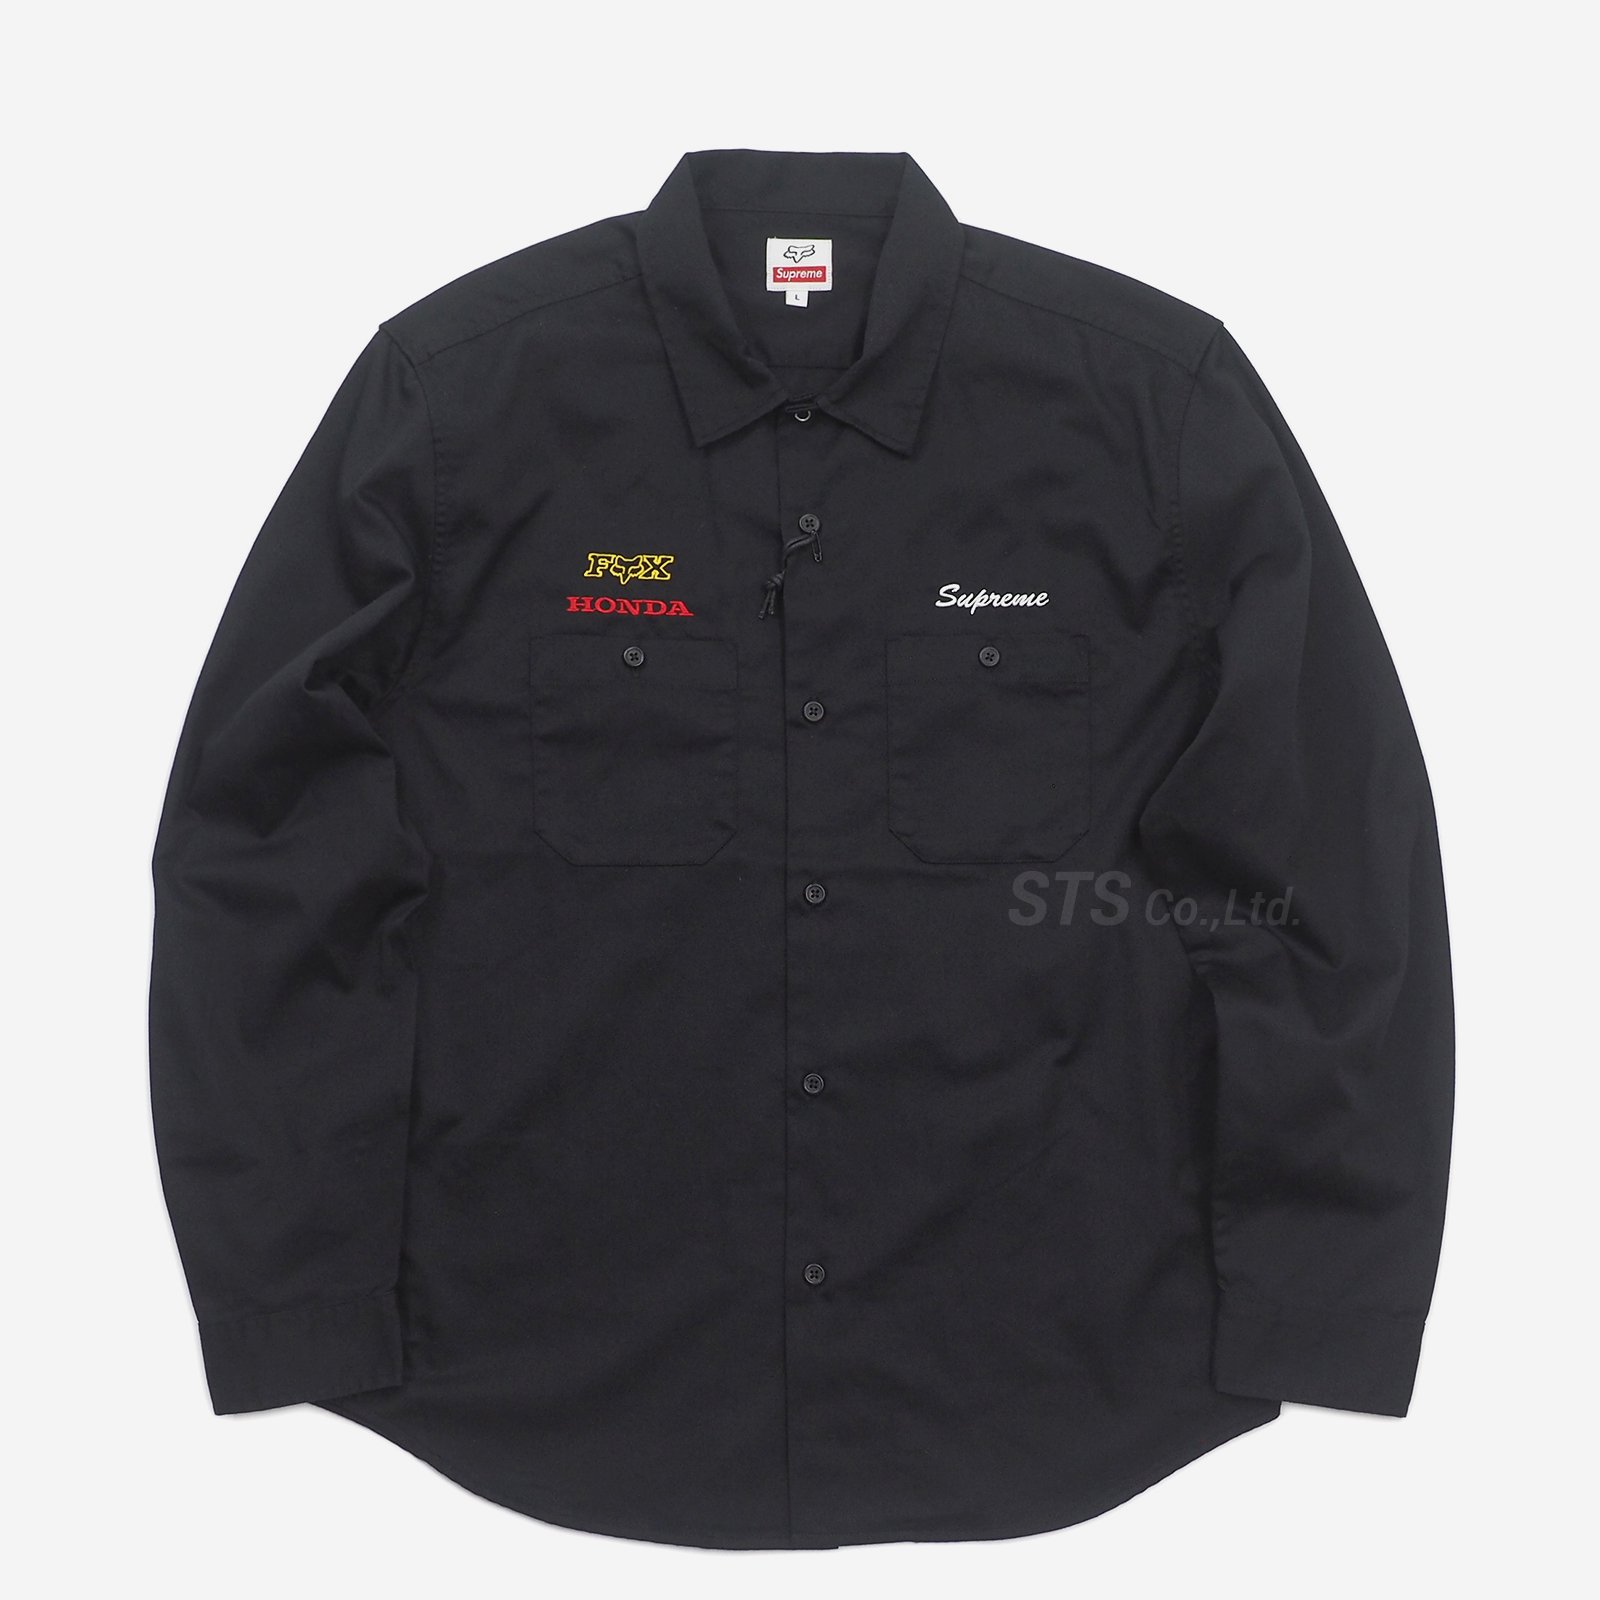 Supreme®/Honda®/Fox® Racing Work Shirt